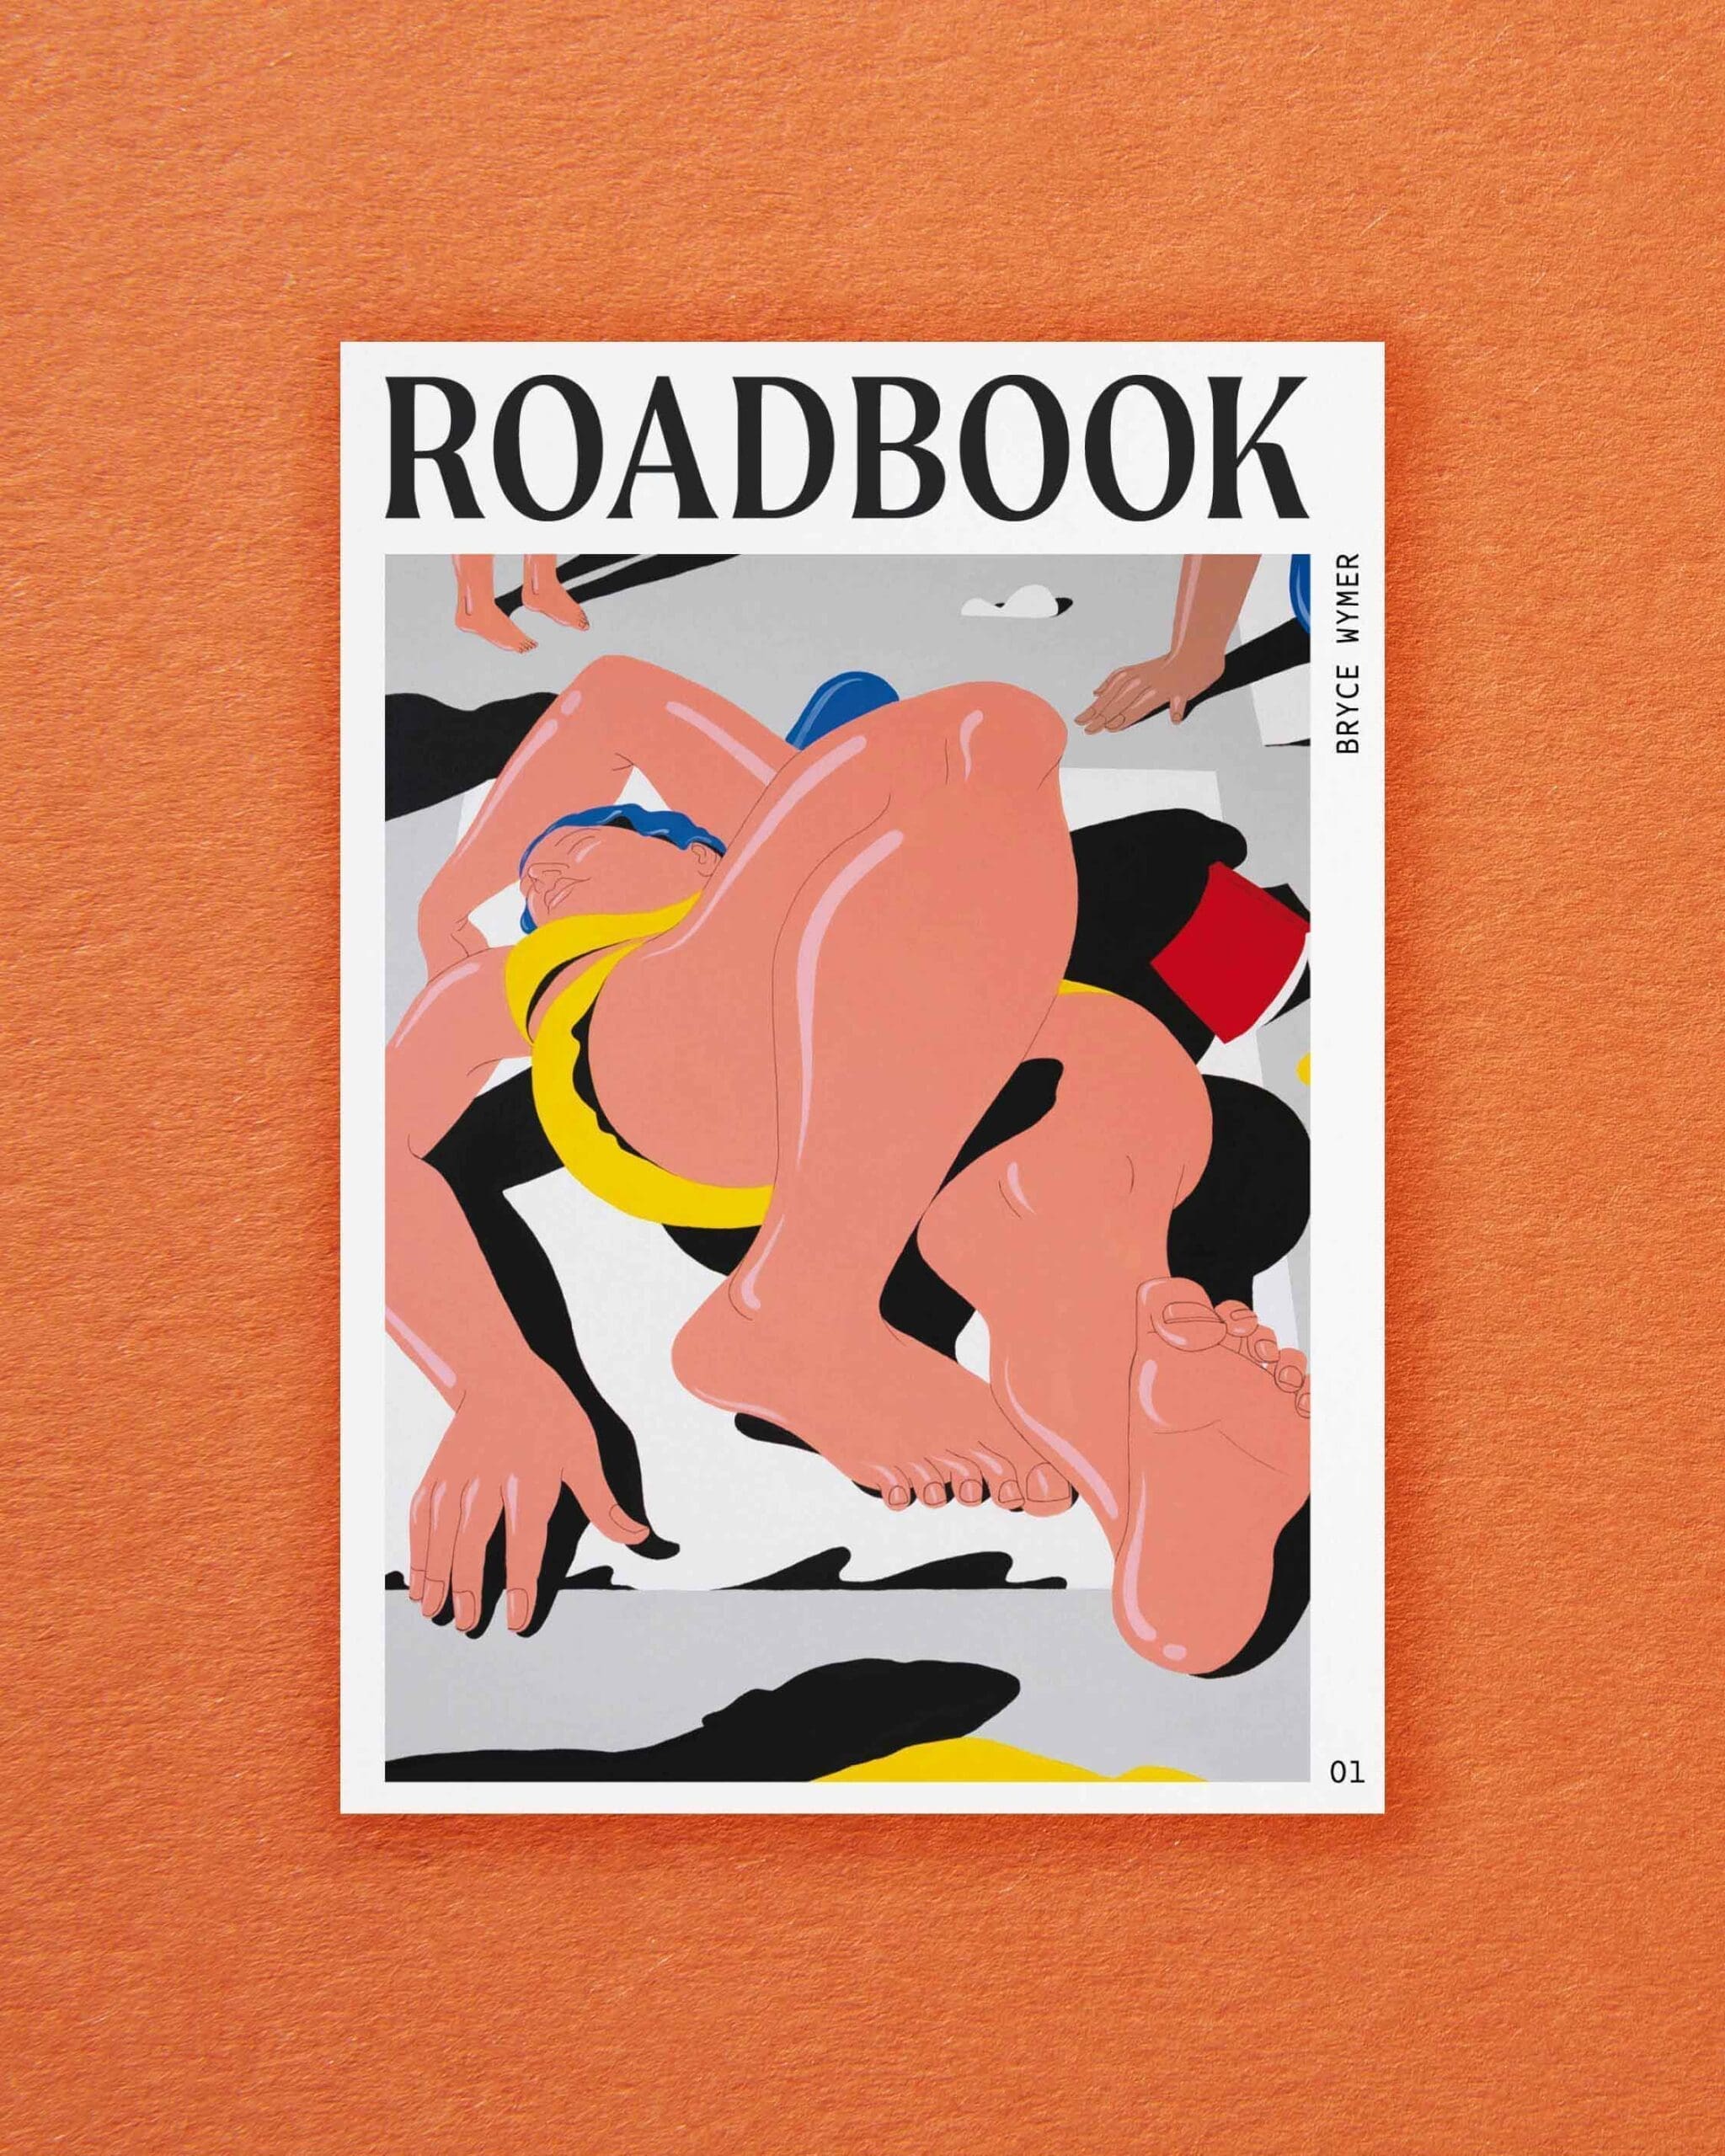 Postcards from ROADBOOK | Bryce Wymer's design, a pop art-style figure lying on a towel on a beach